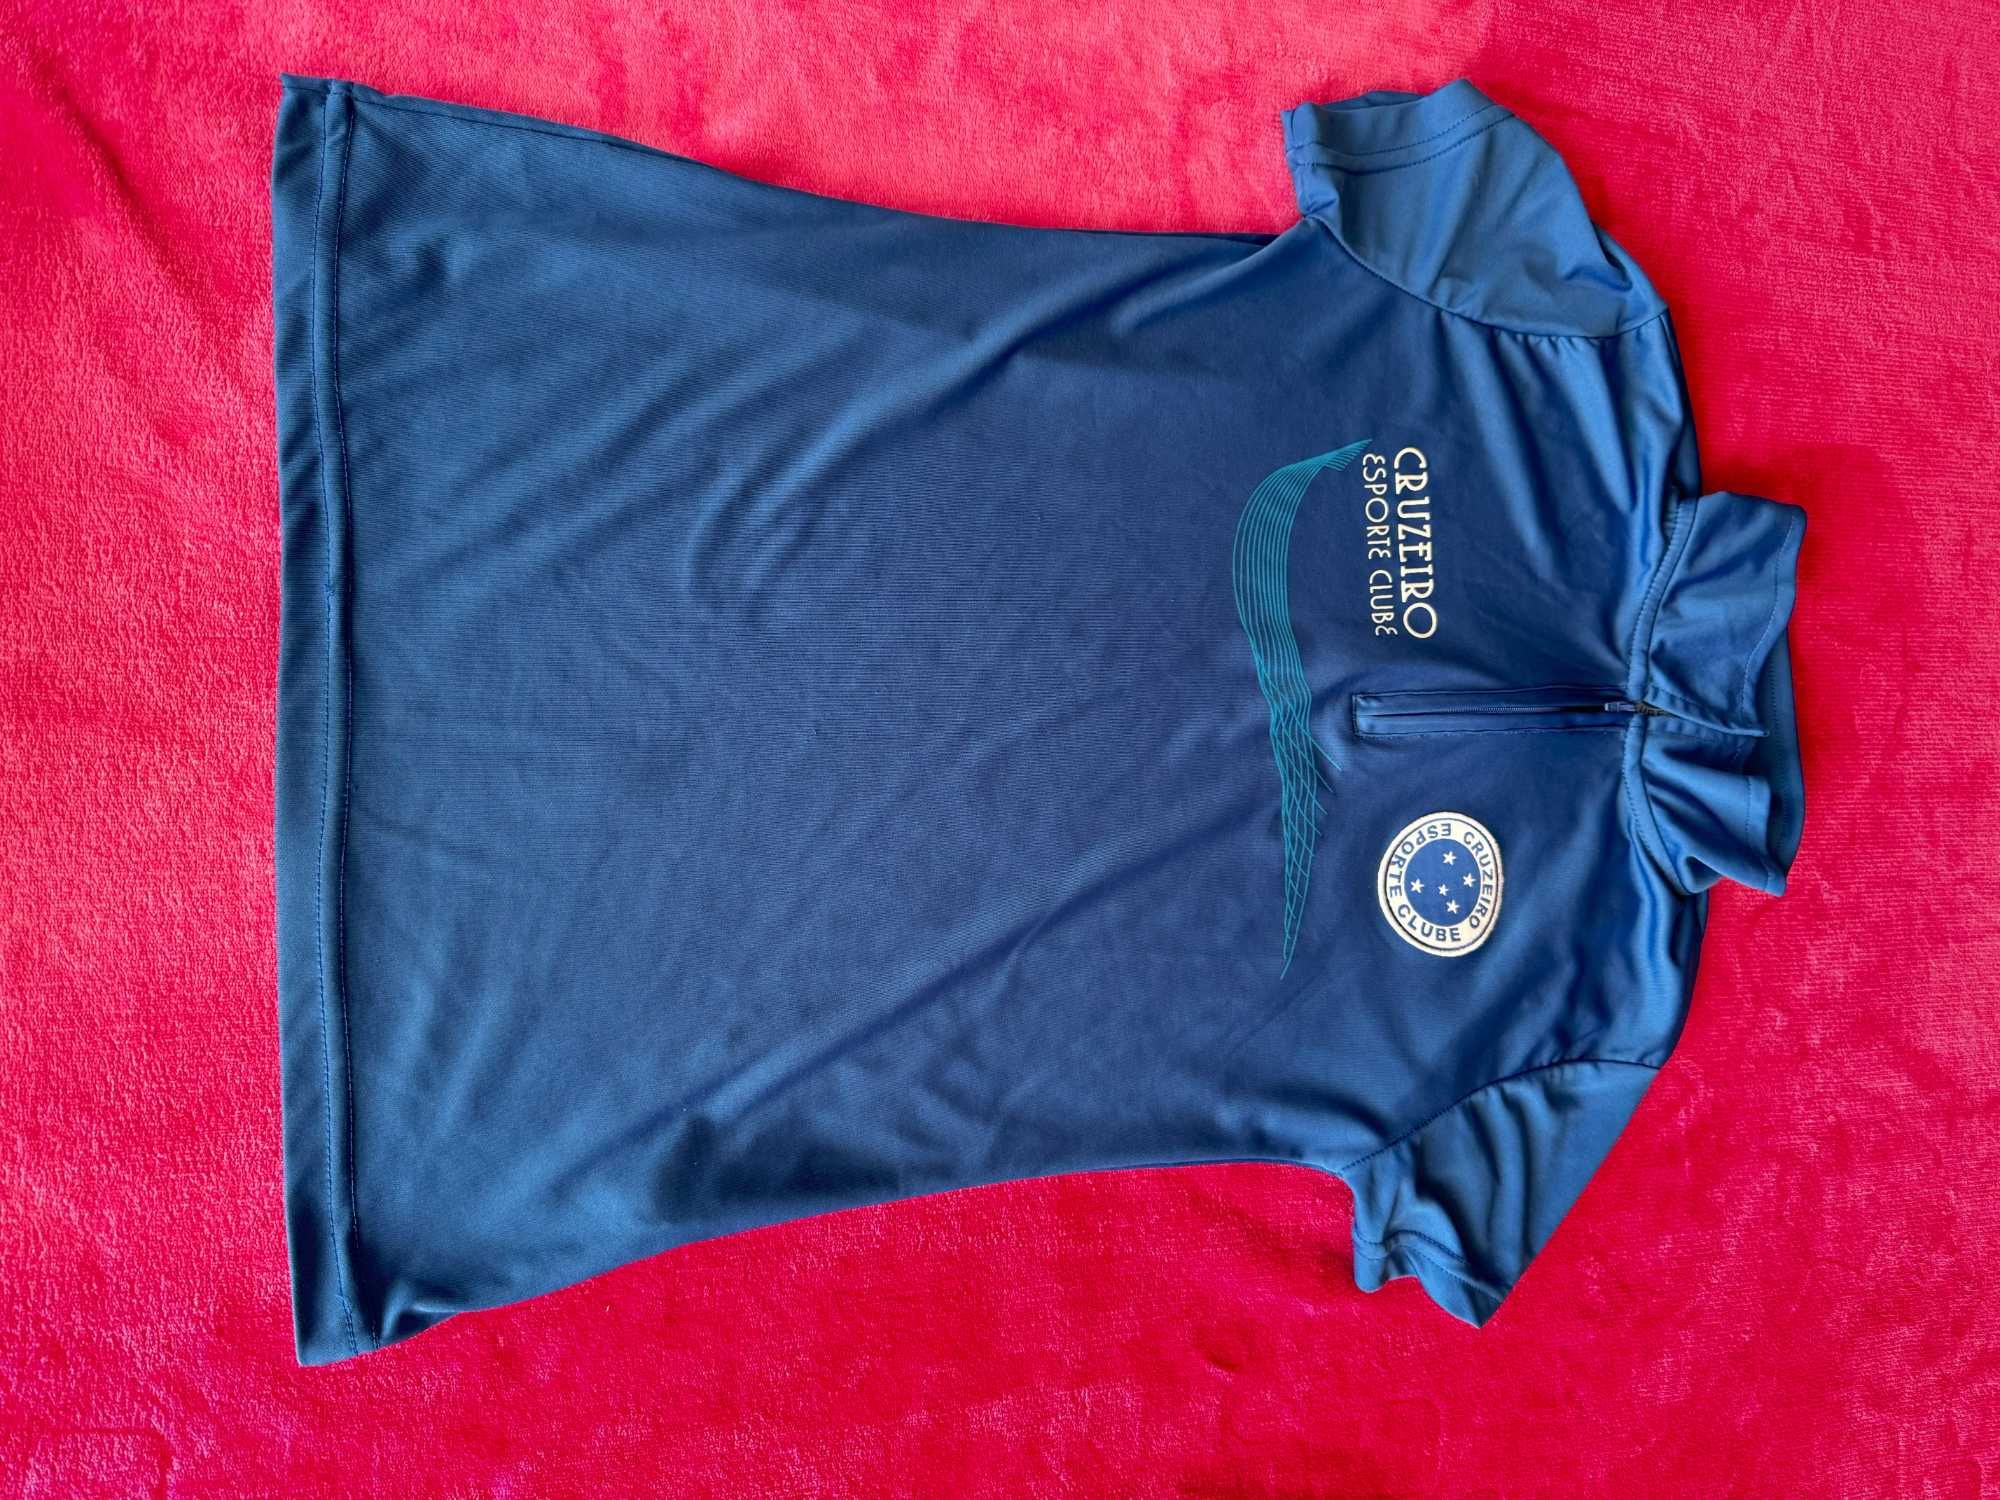 Camiseta Oficial Feminina do Cruzeiro Esporte Clube - Tamanho G